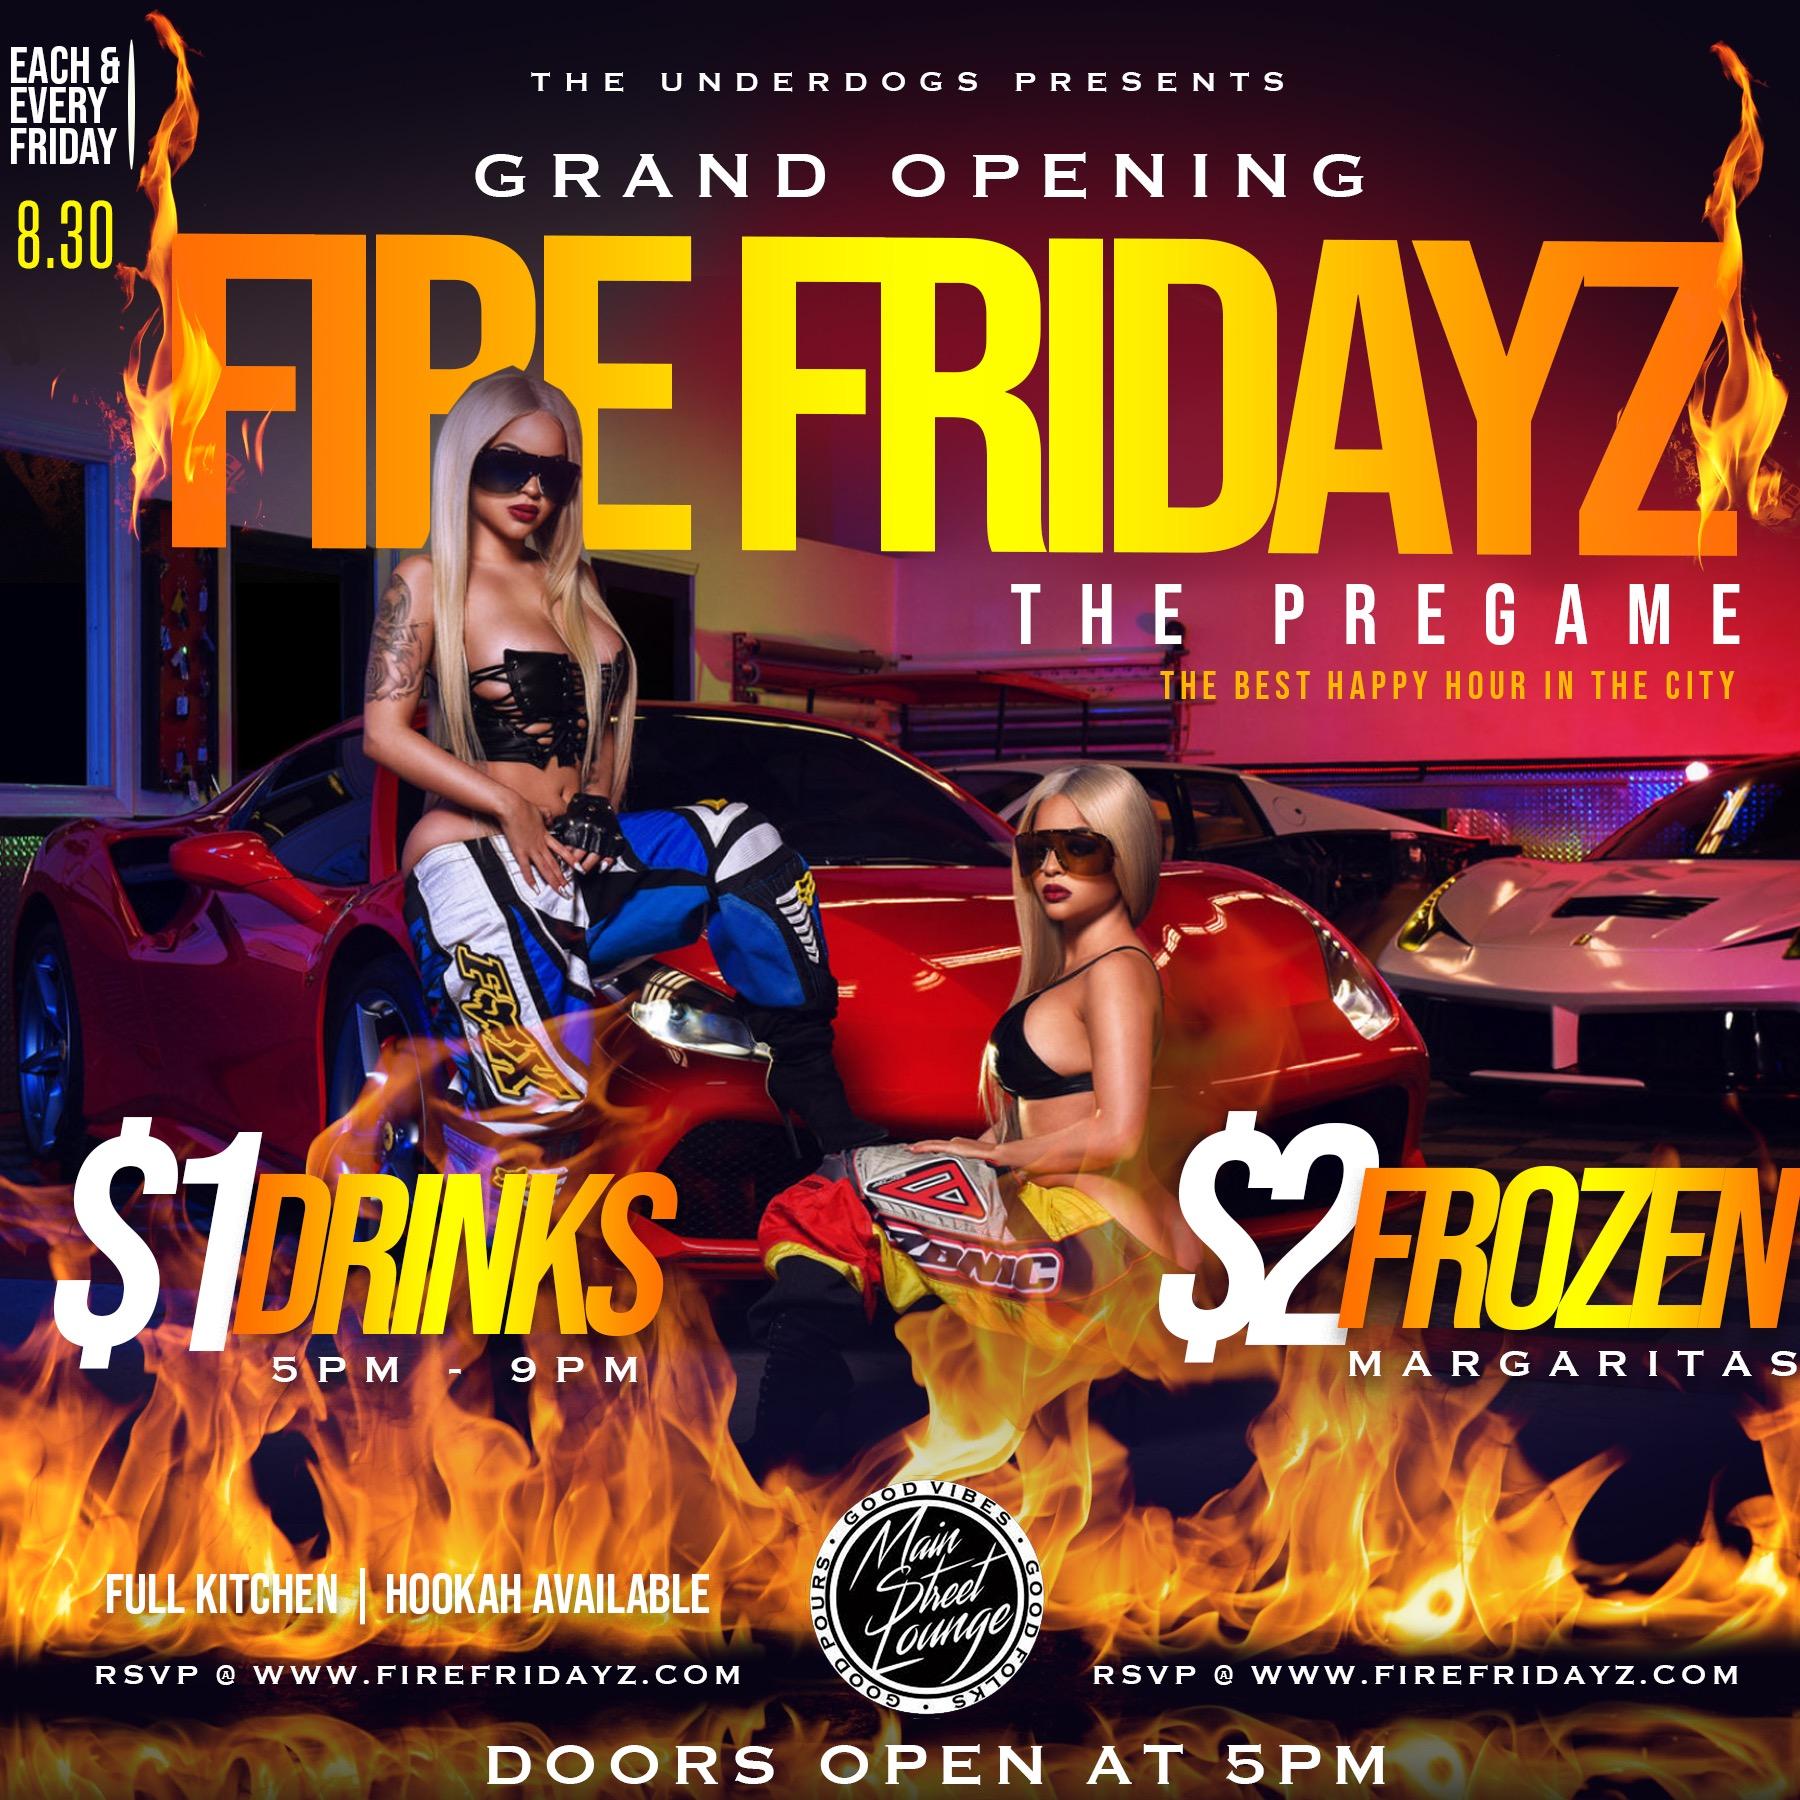 FIRE FRIDAYZ @ Main Street Lounge! $1 DRINKS | 5PM-2AM | FULL KITCHEN 